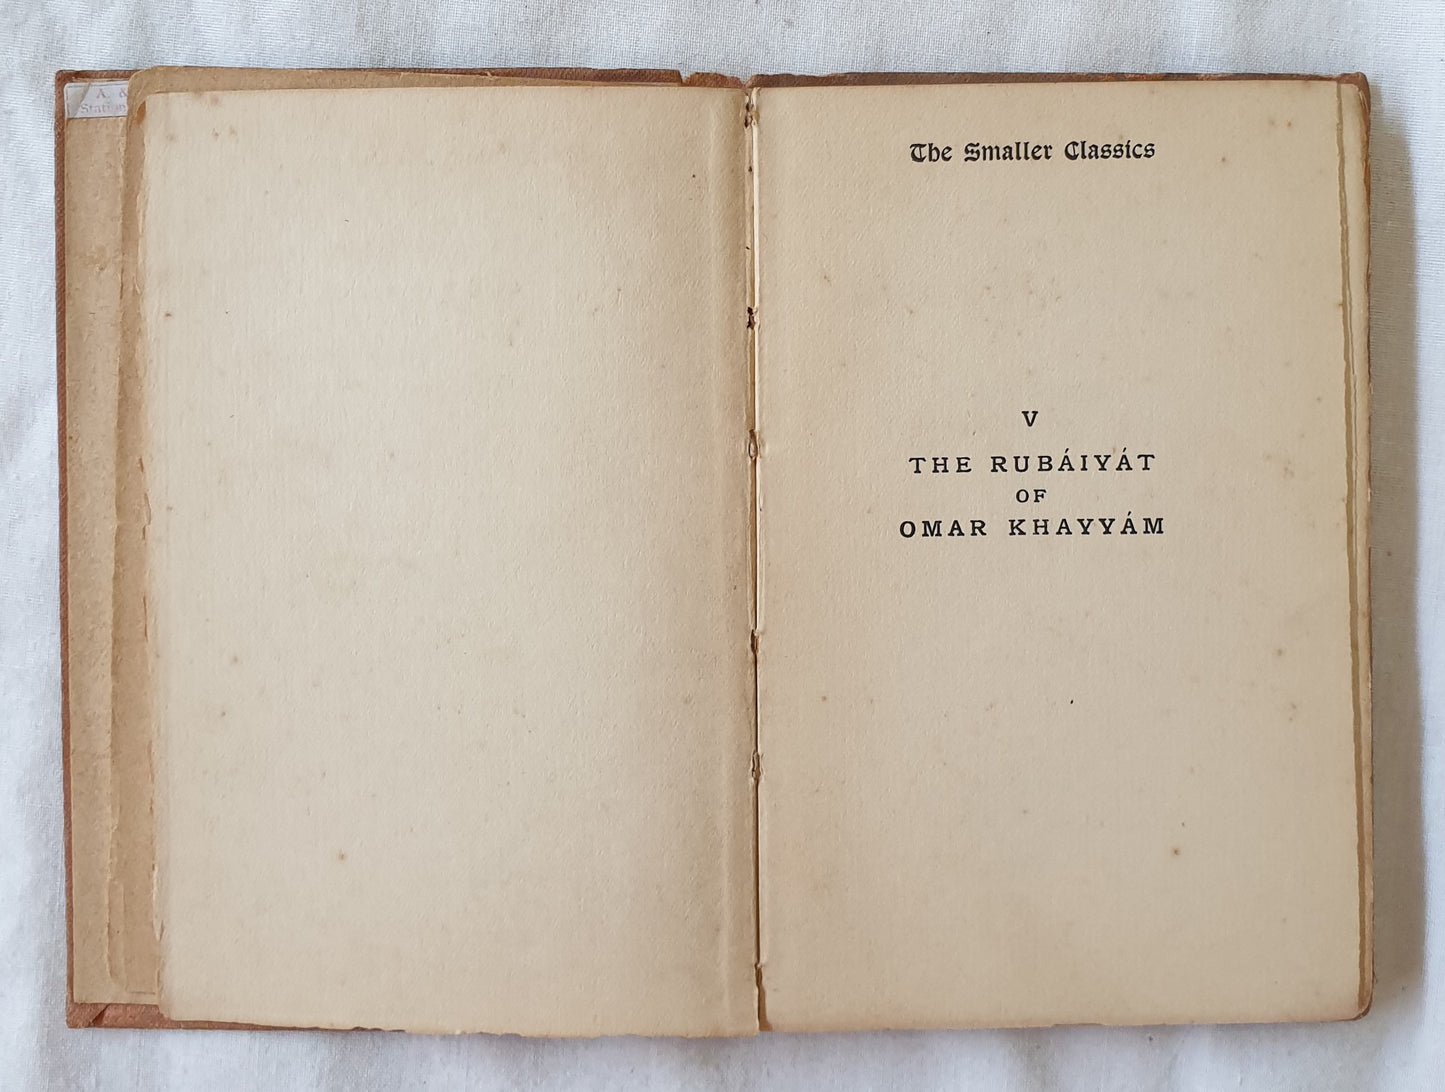 The Rubaiyat of Omar Khayyam  Translated by Edward Fitzgerald  (The Smaller Classics)